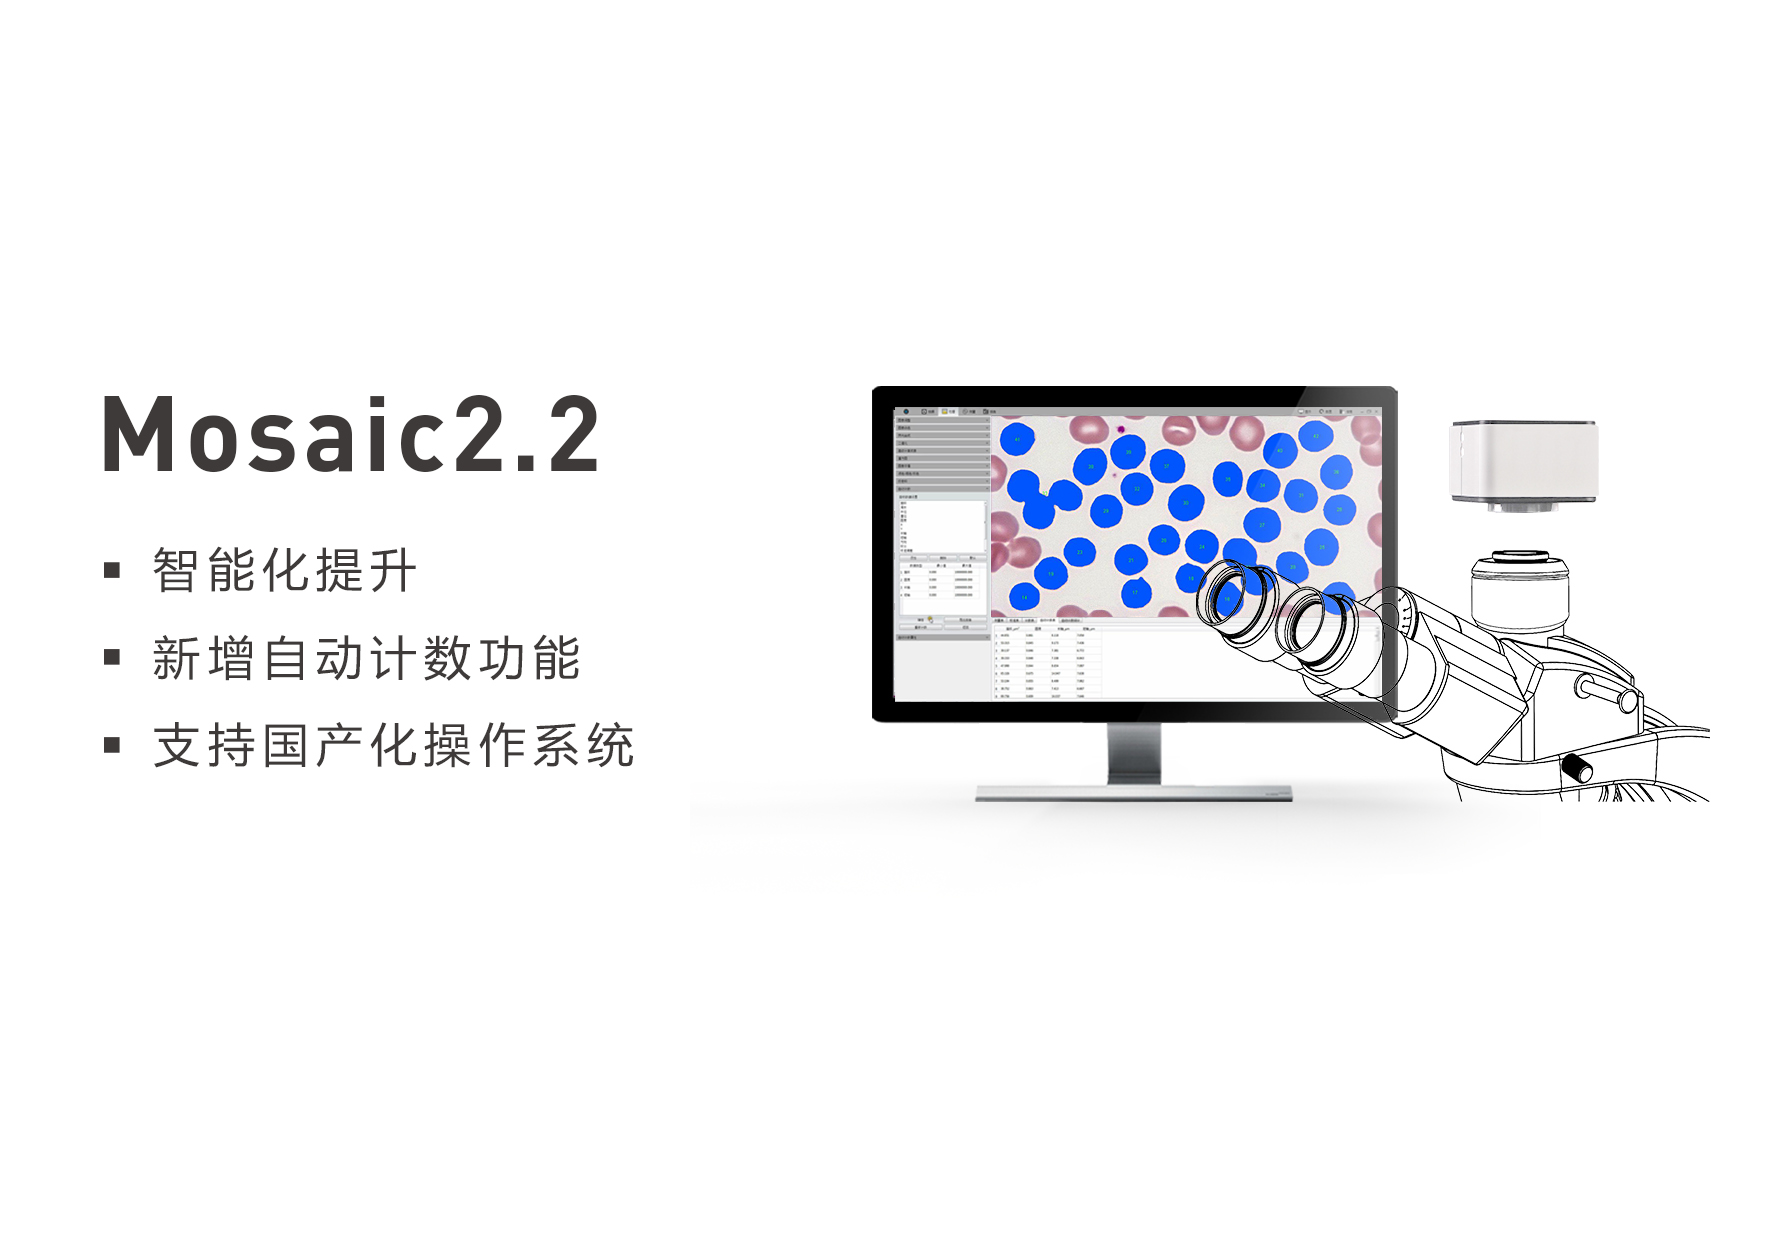 Mosaic2.2 banner